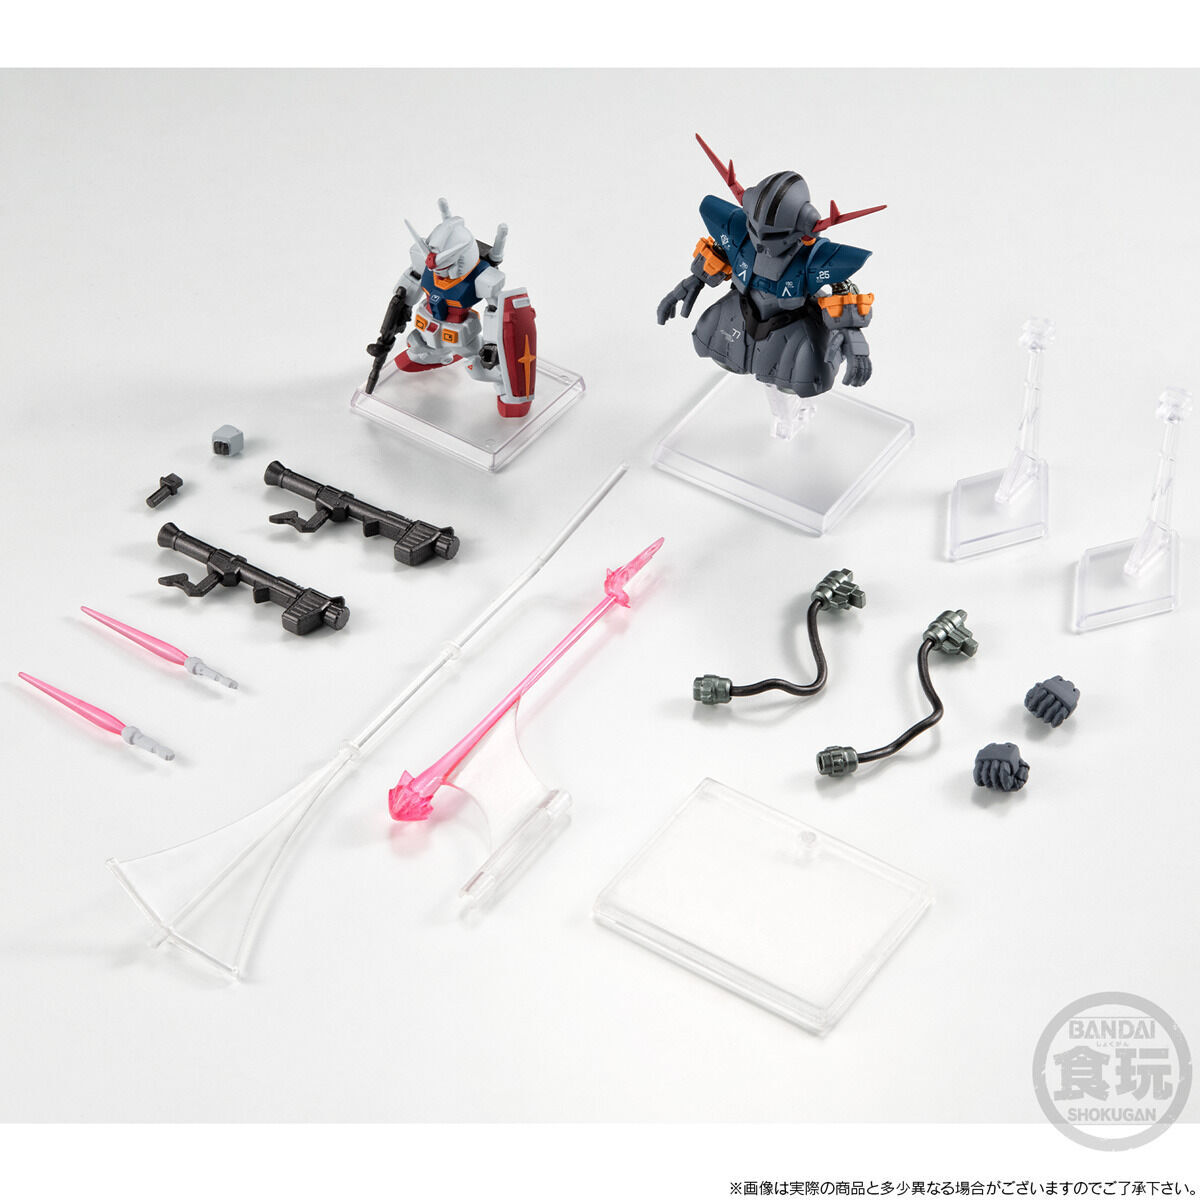 FW Gundam Converge :Core No.43 RX-78-2 Gundam + MSN-02 Zeong(Mobile Suit Gundam Last Shooting Effect Set)